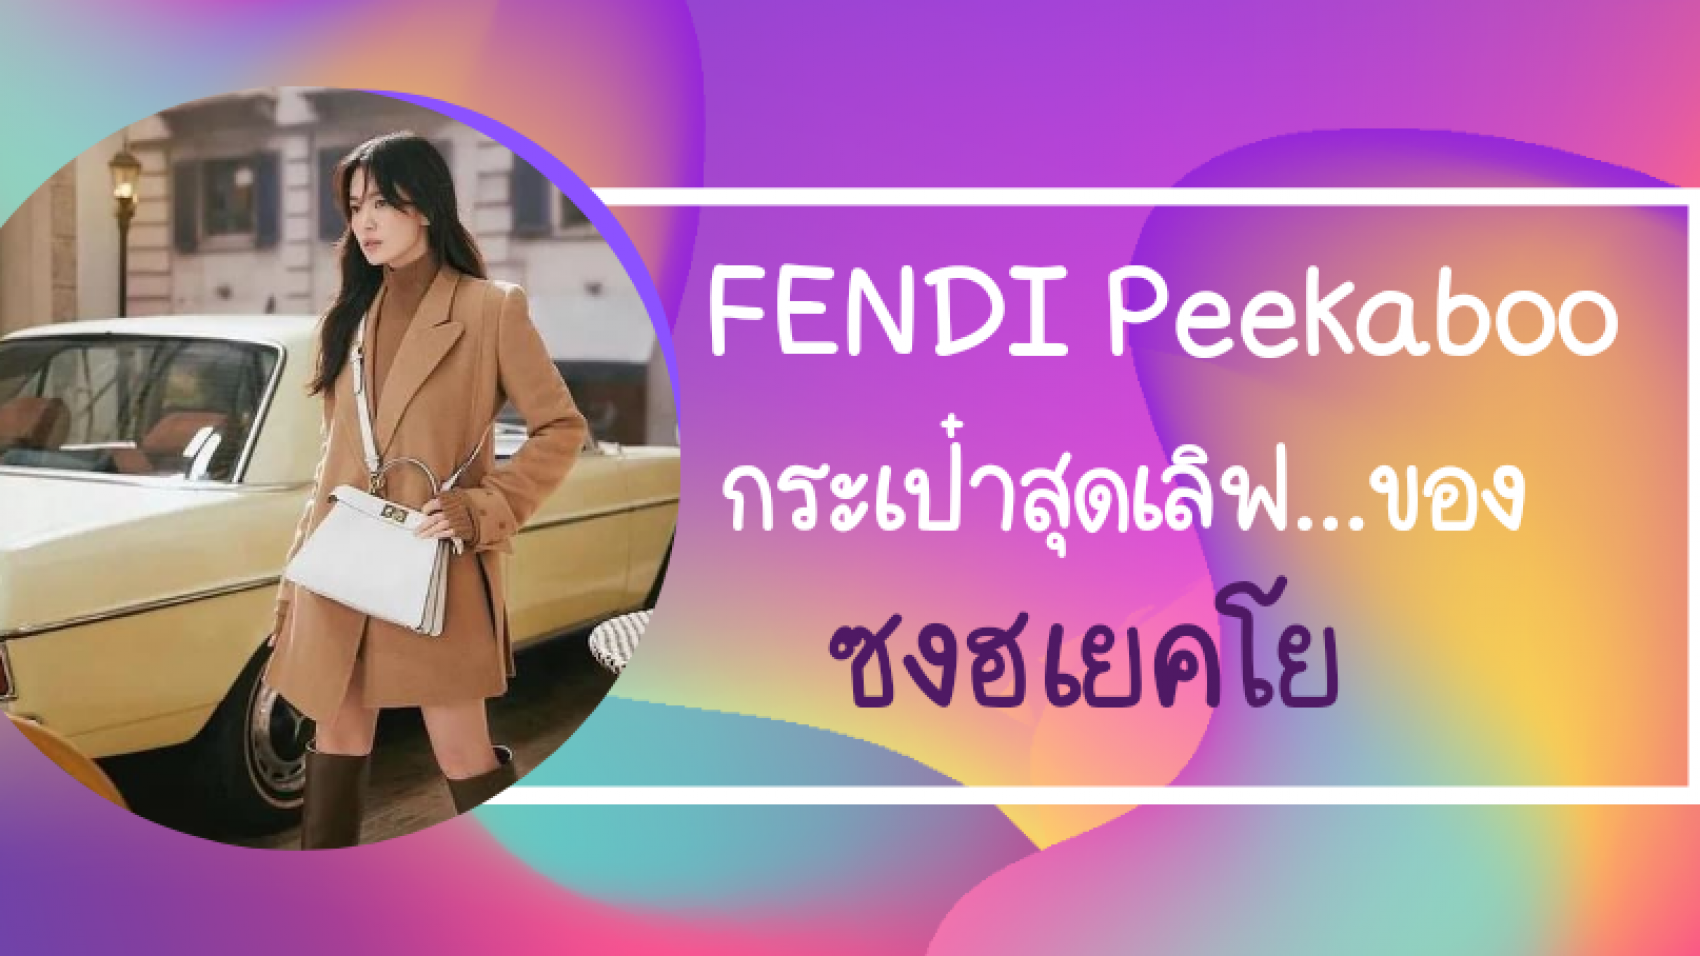 FENDI Peekaboo กระเป๋าสุดเลิฟของ ซงฮเยคโย ที่เห็นแล้วอยากมีสักใบ